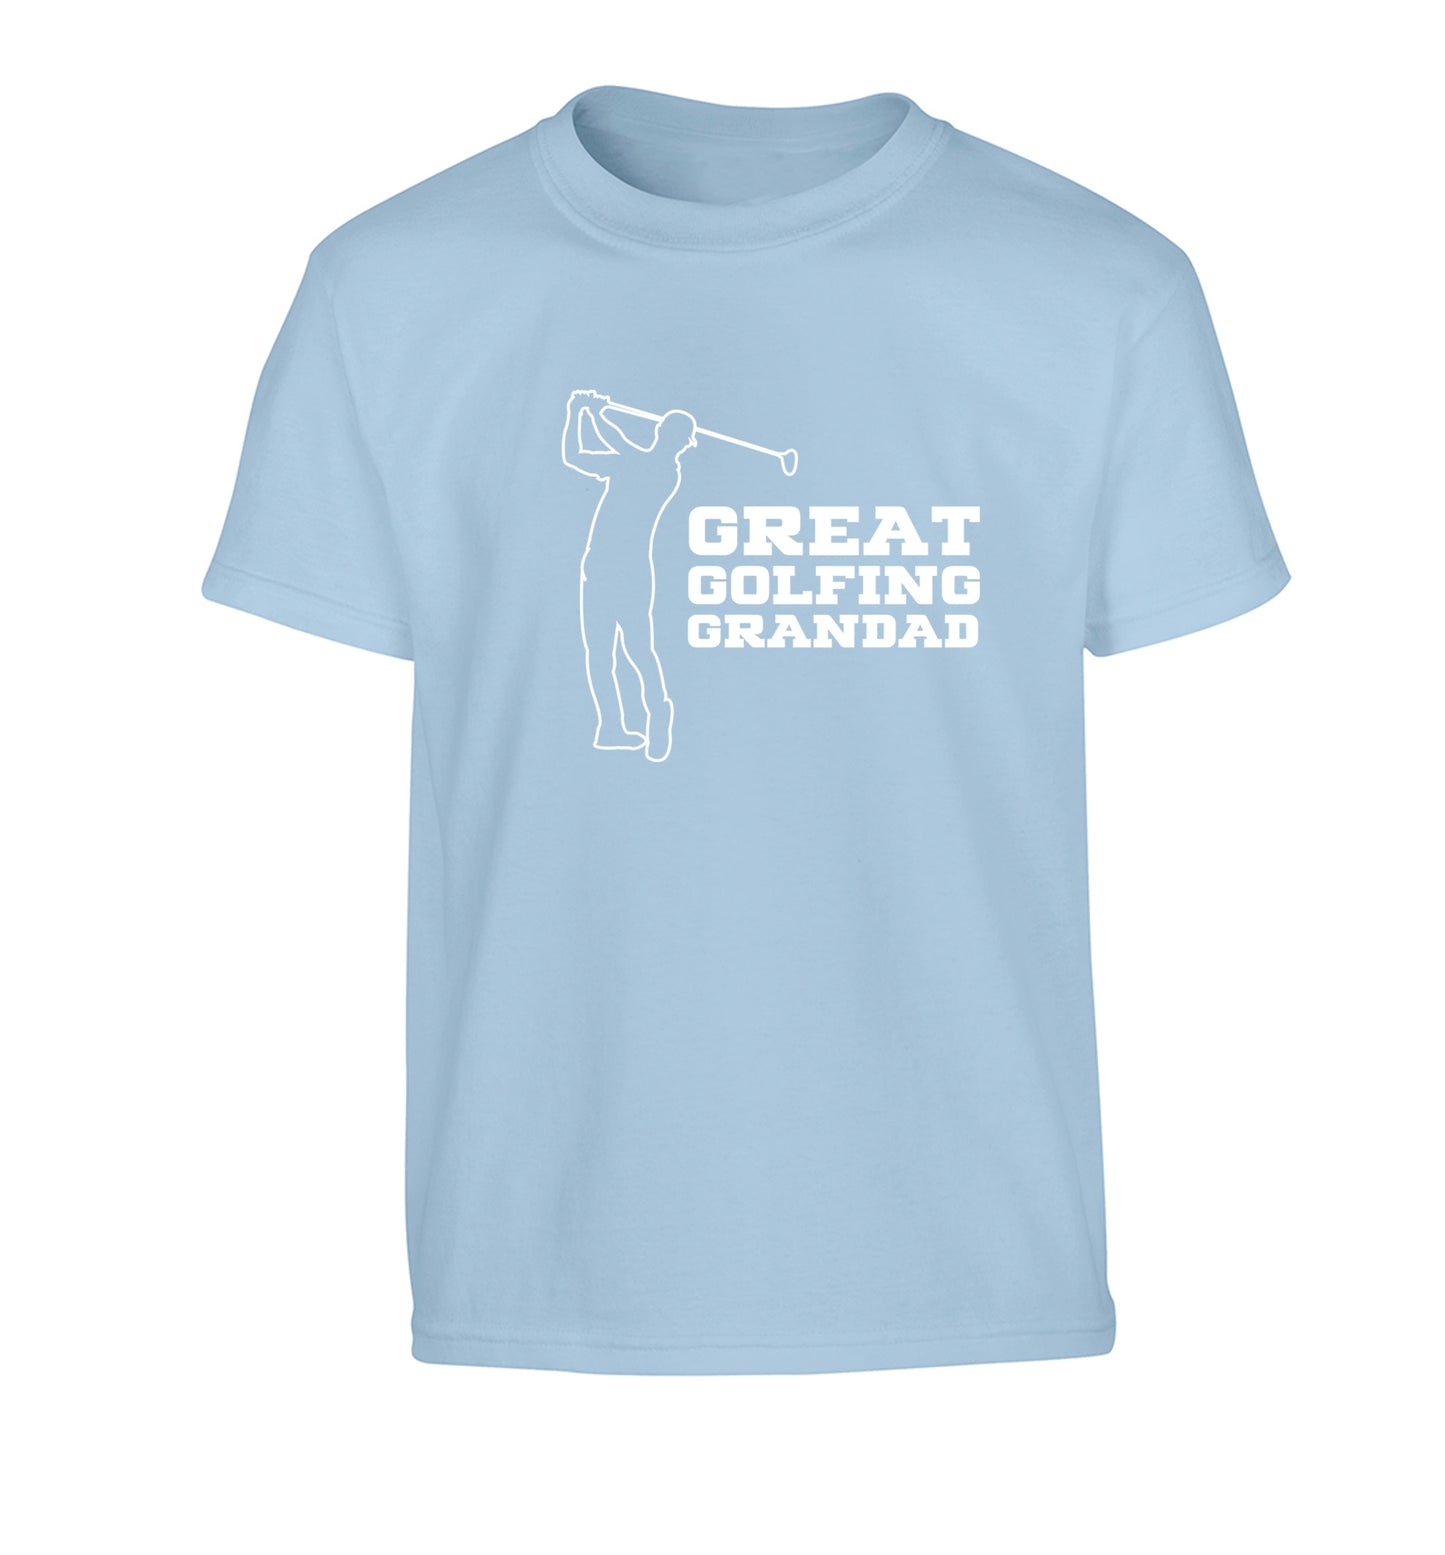 Great Golfing Grandad Children's light blue Tshirt 12-13 Years